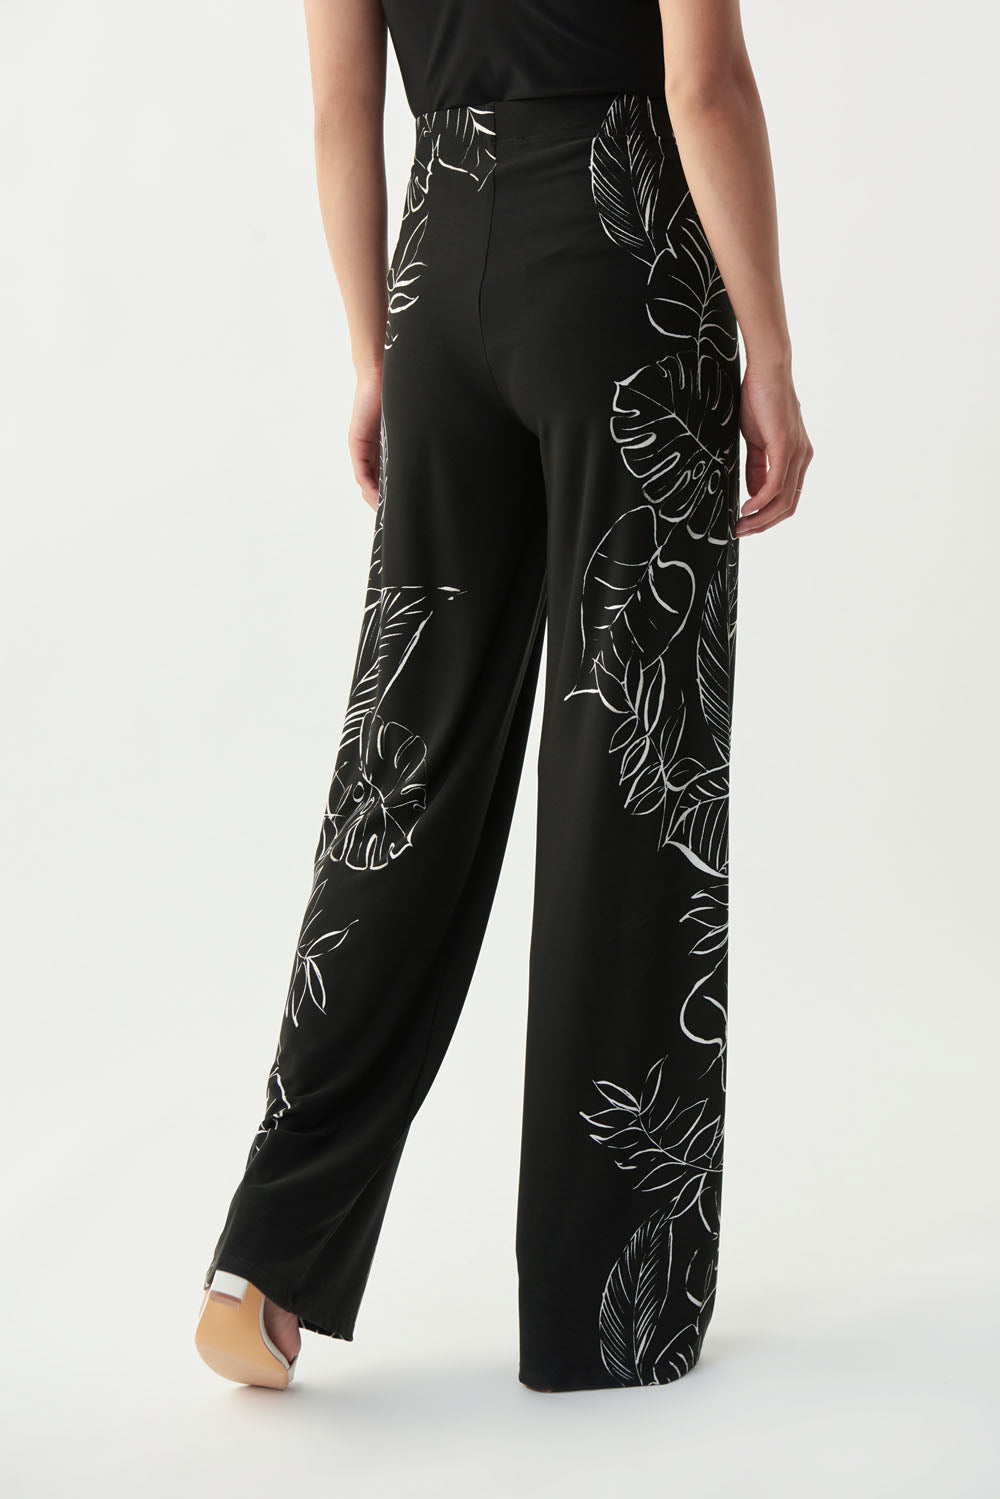 Joseph Ribkoff Black-Vanilla Print Pants Style 221321